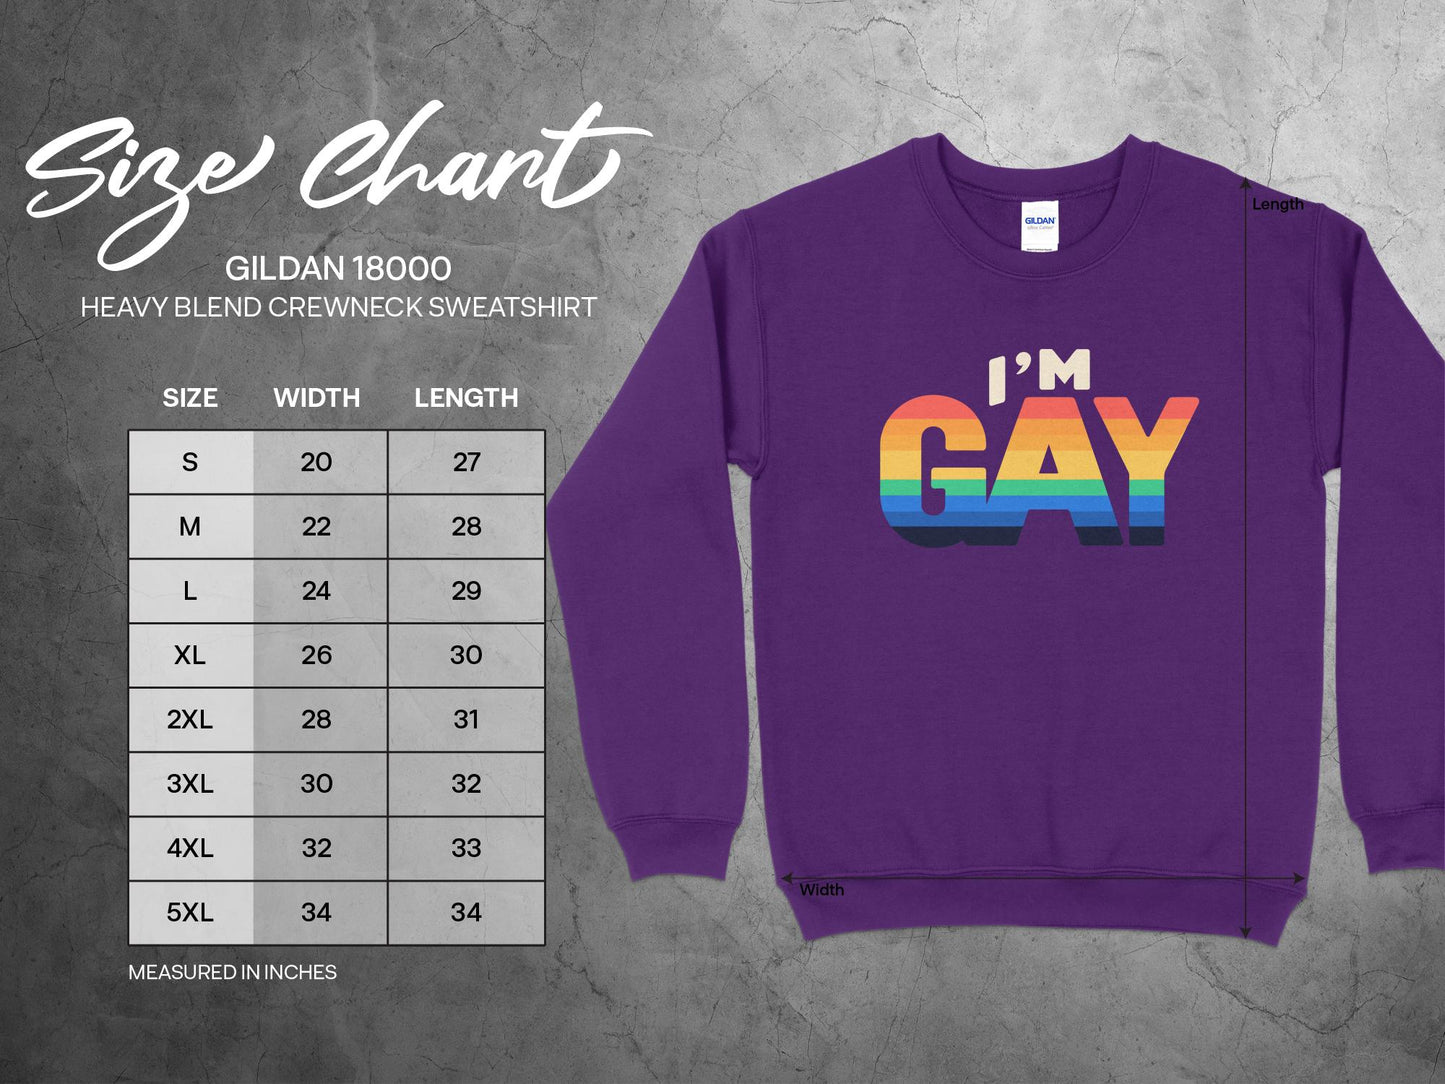 I'm Gay Sweatshirt, sizing chart